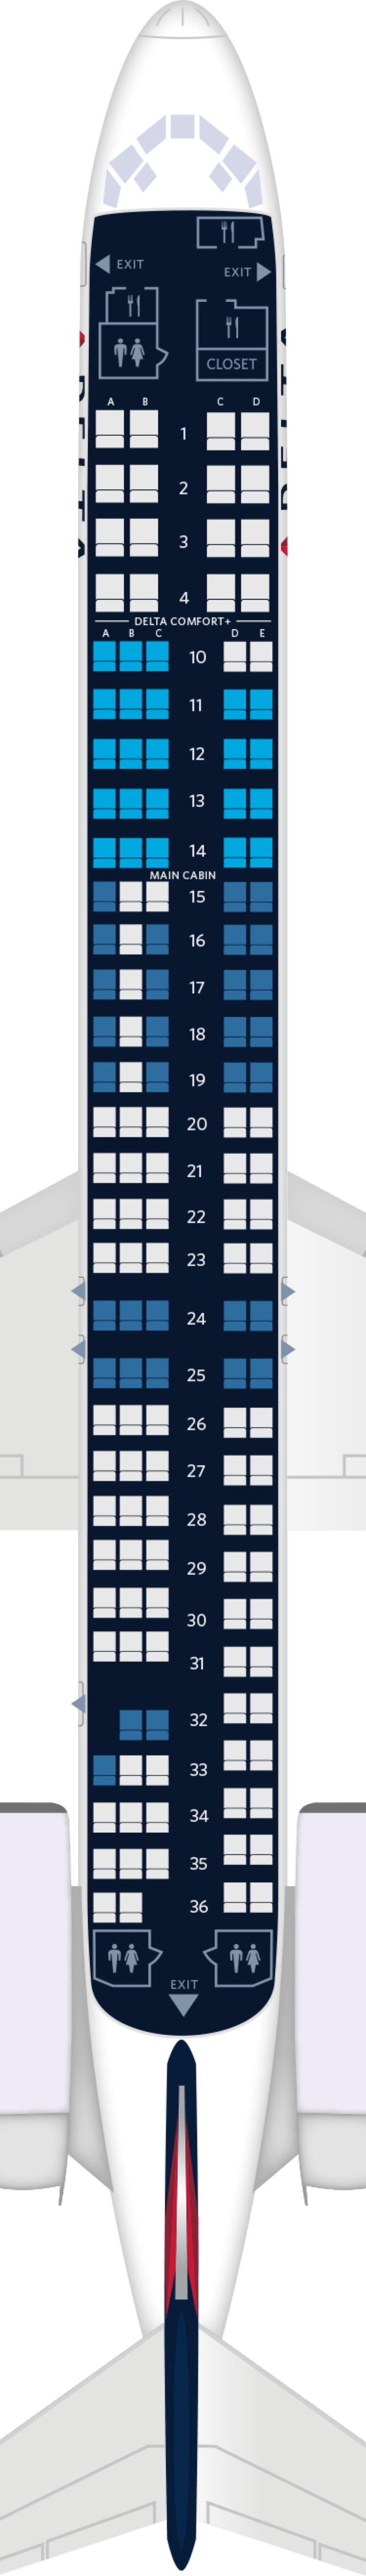 McDonnell Douglas MD-88 Aircraft Seat Maps, Specs & Amenities : Delta ...